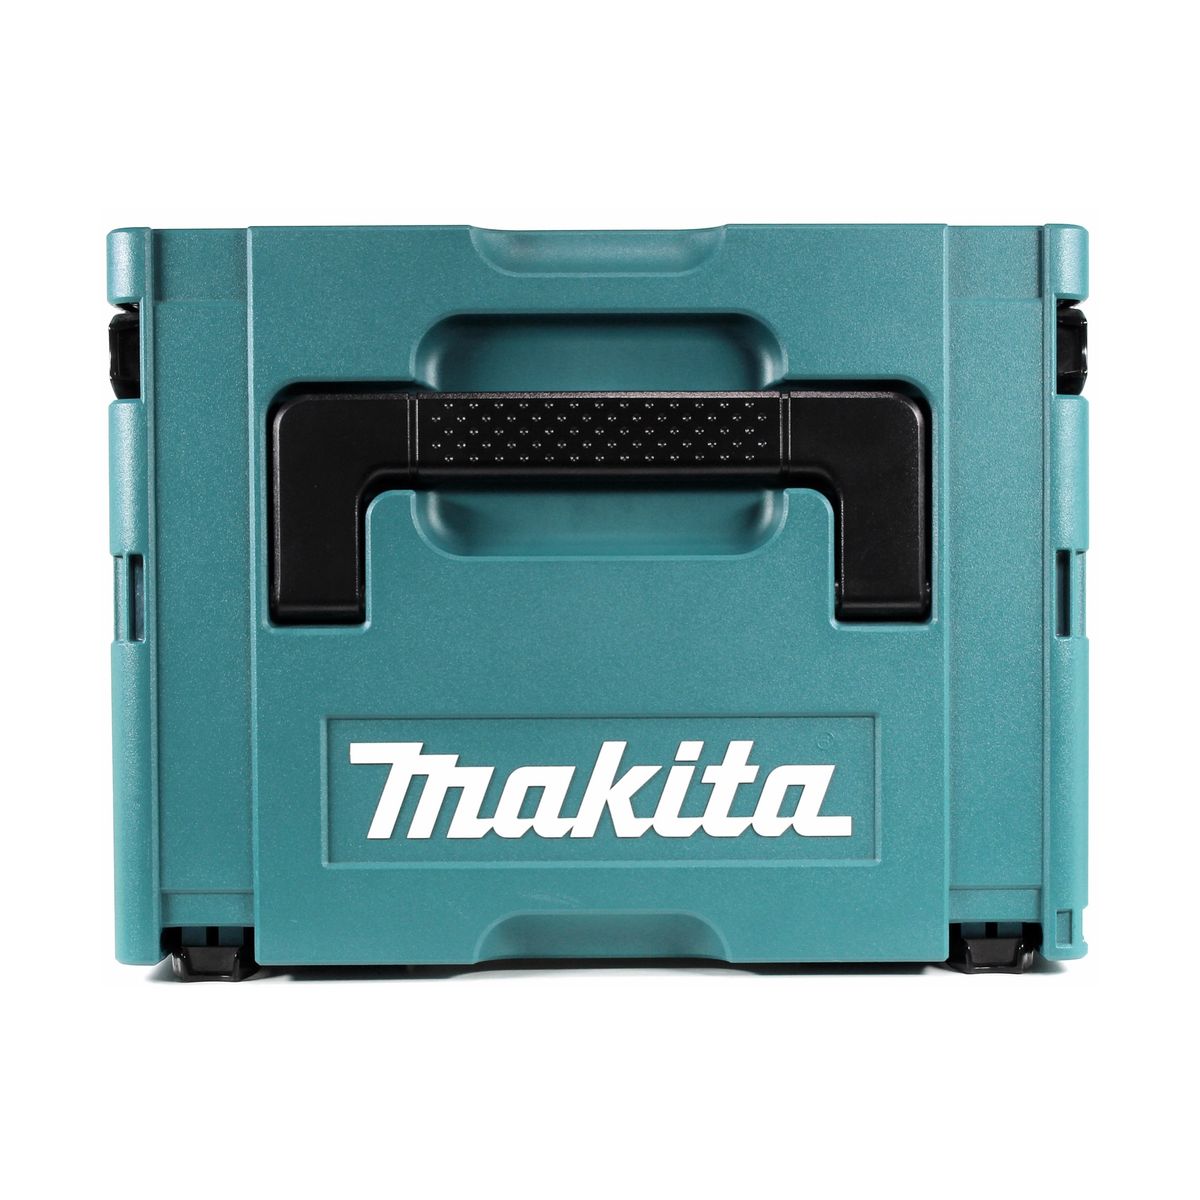 Makita DDF 483 RG1J Akku Bohrschrauber 18 V 40 Nm Brushless + 1x Akku 6,0 + Ladegerät + Makpac